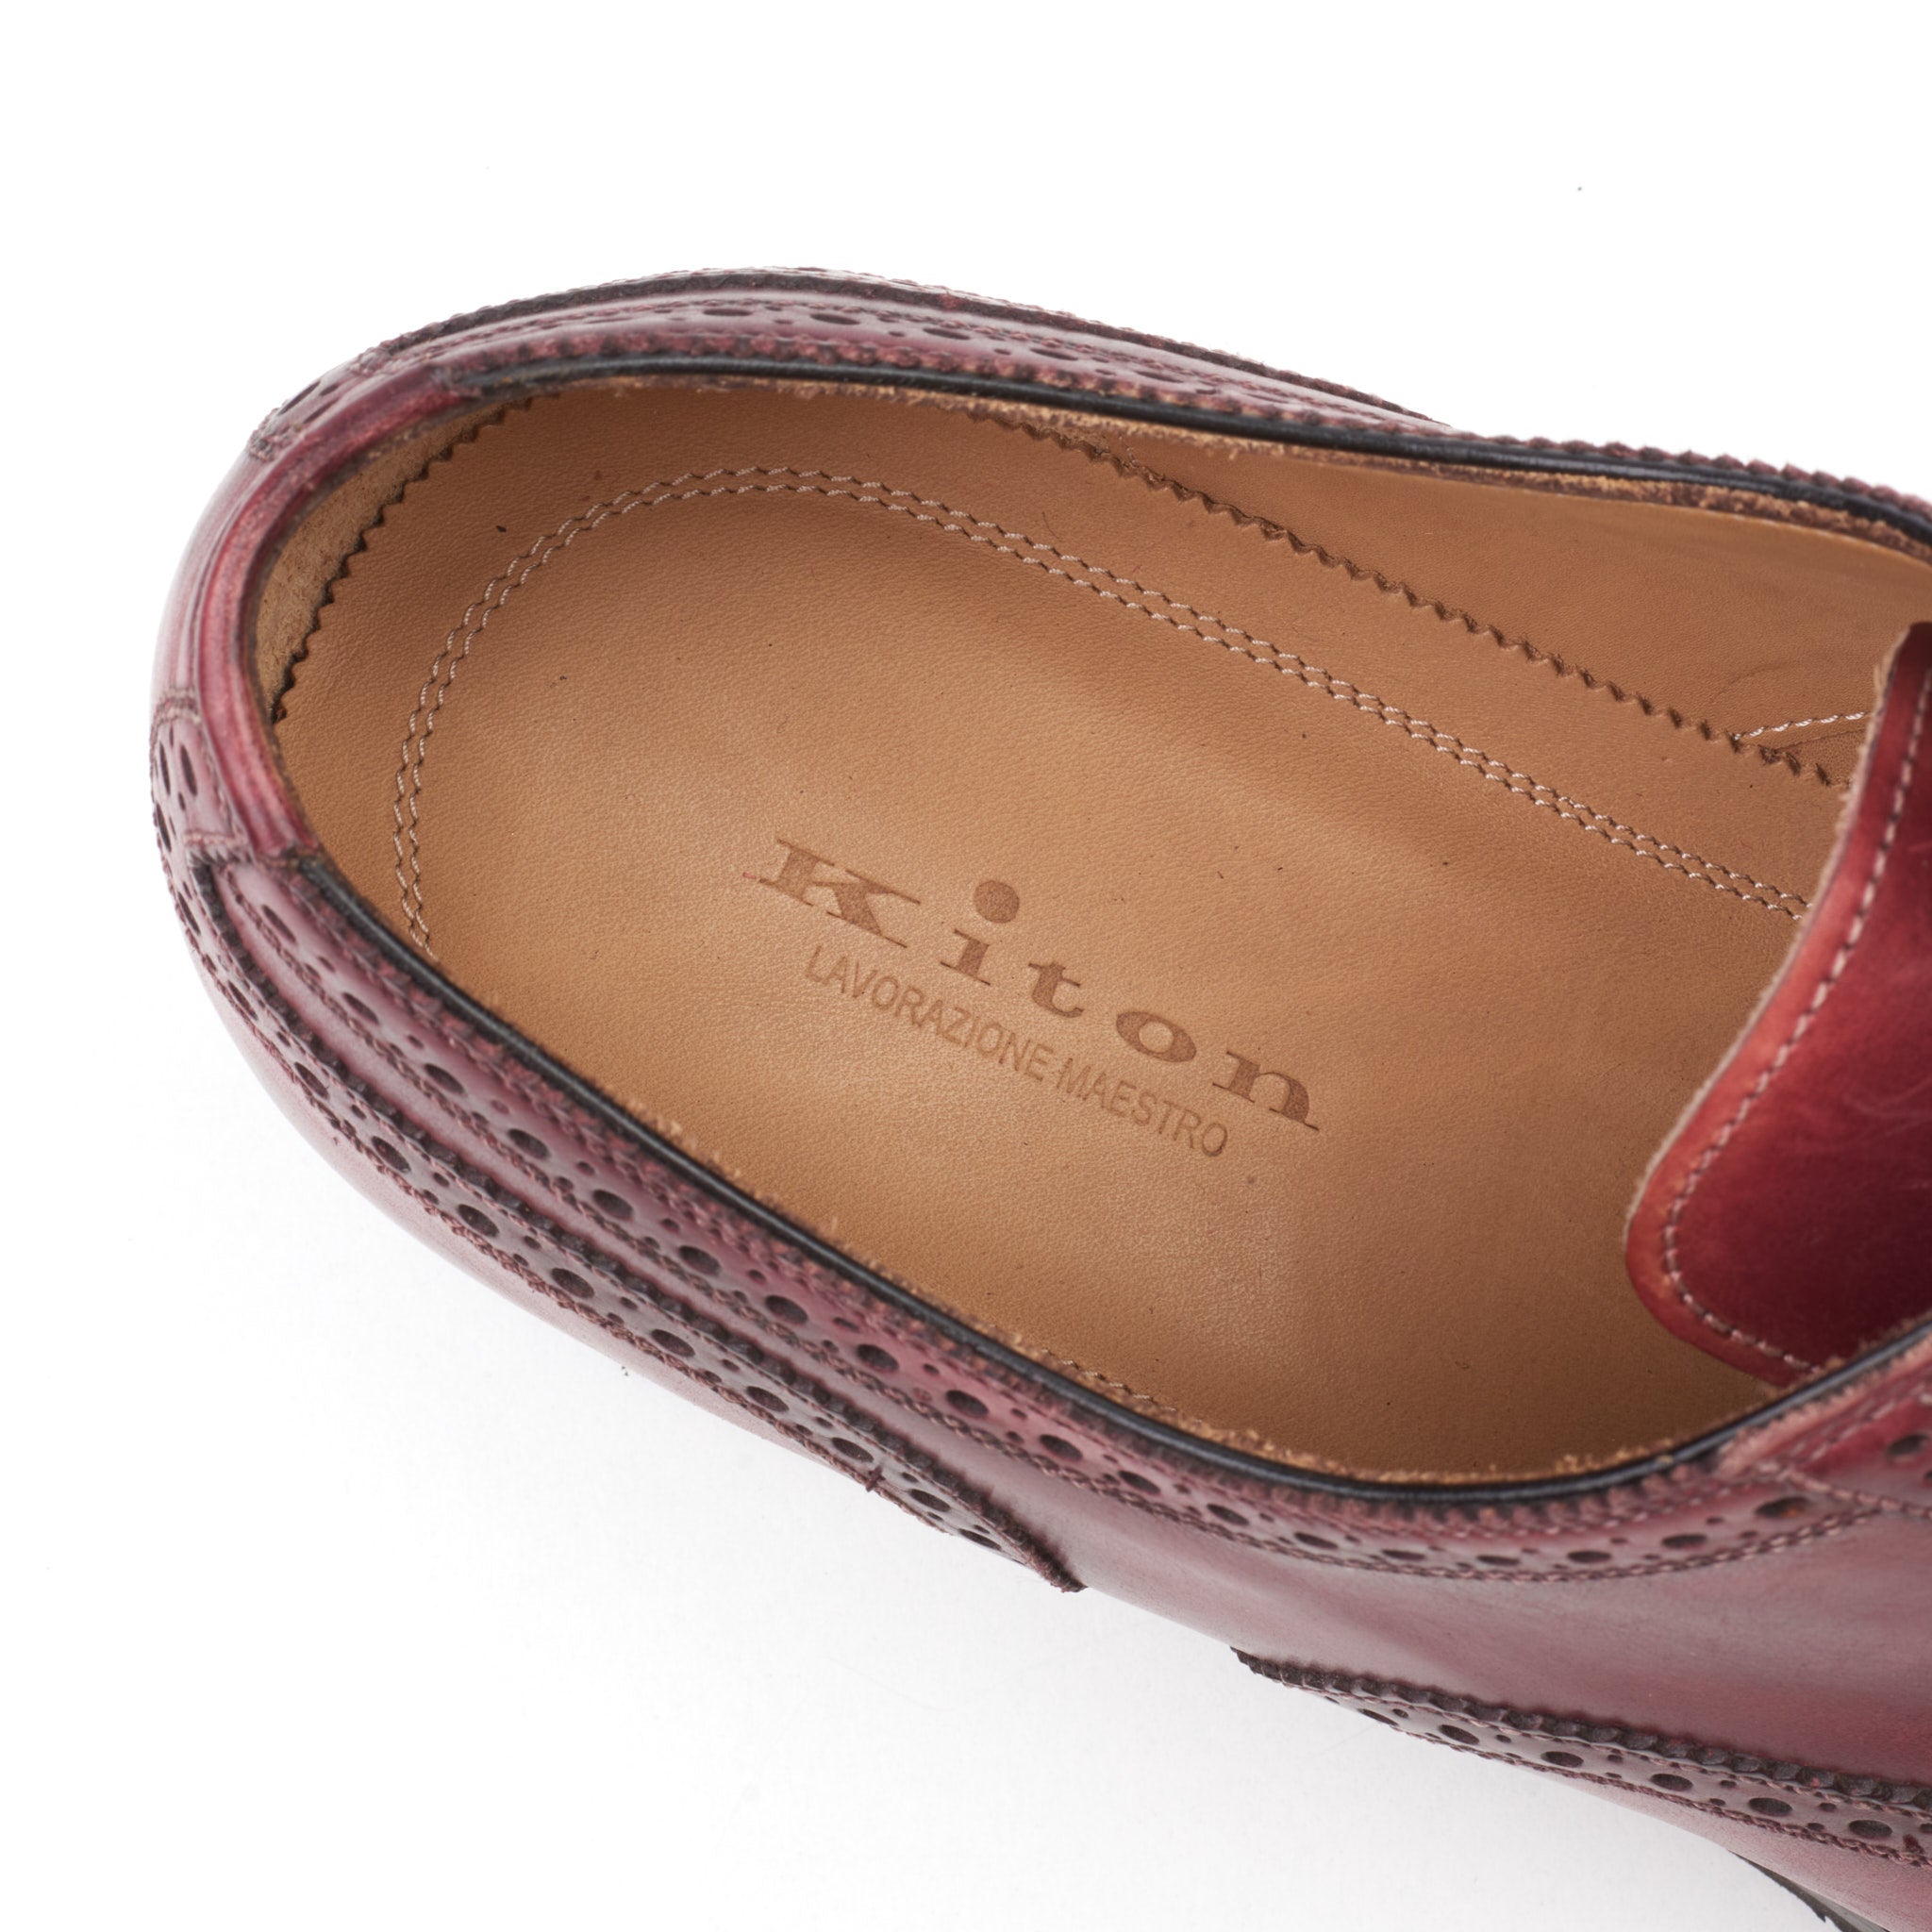 KITON Handmade Bordeaux Calfskin Leather Oxford Shoes US 10 NEW with Box KITON